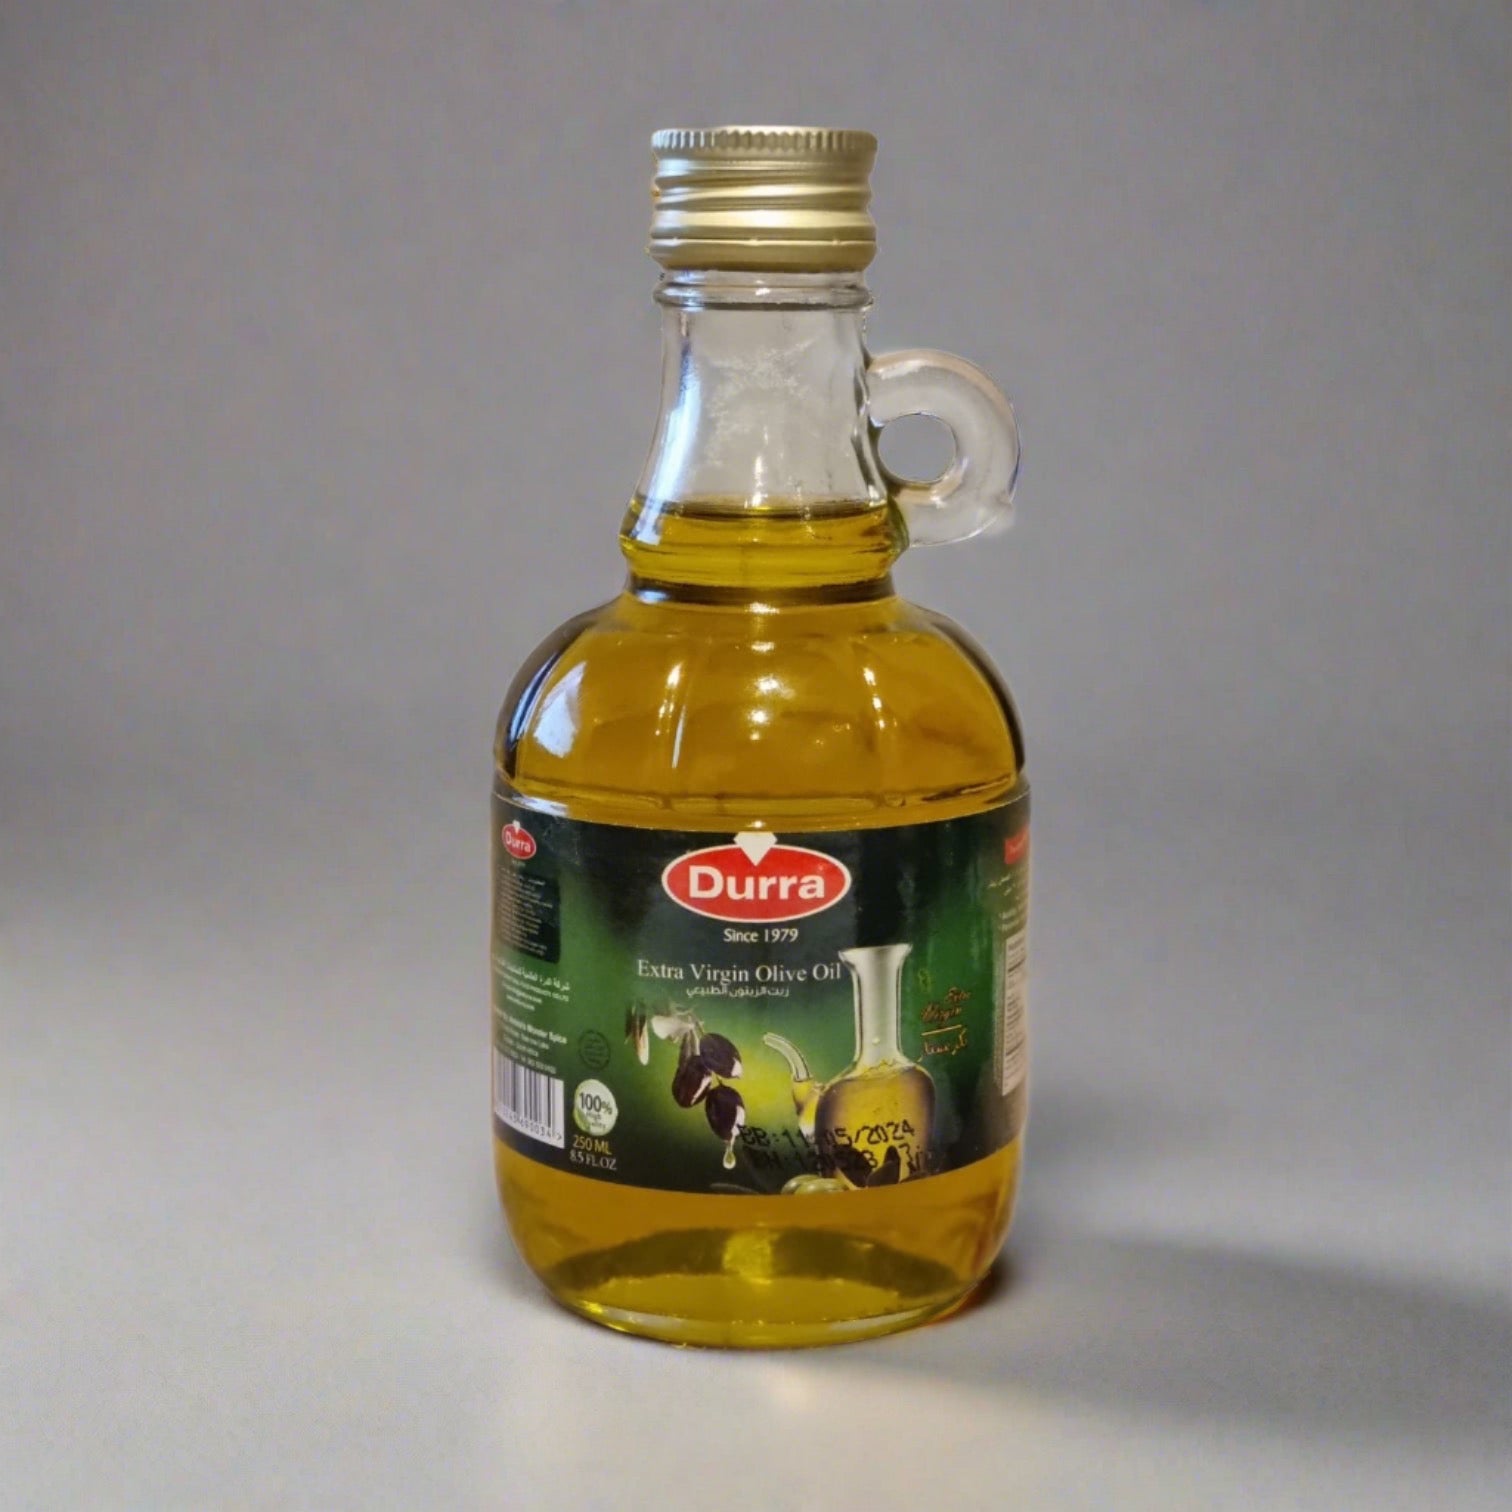 I-Durra Extra Virgin Olive Oil 250ml